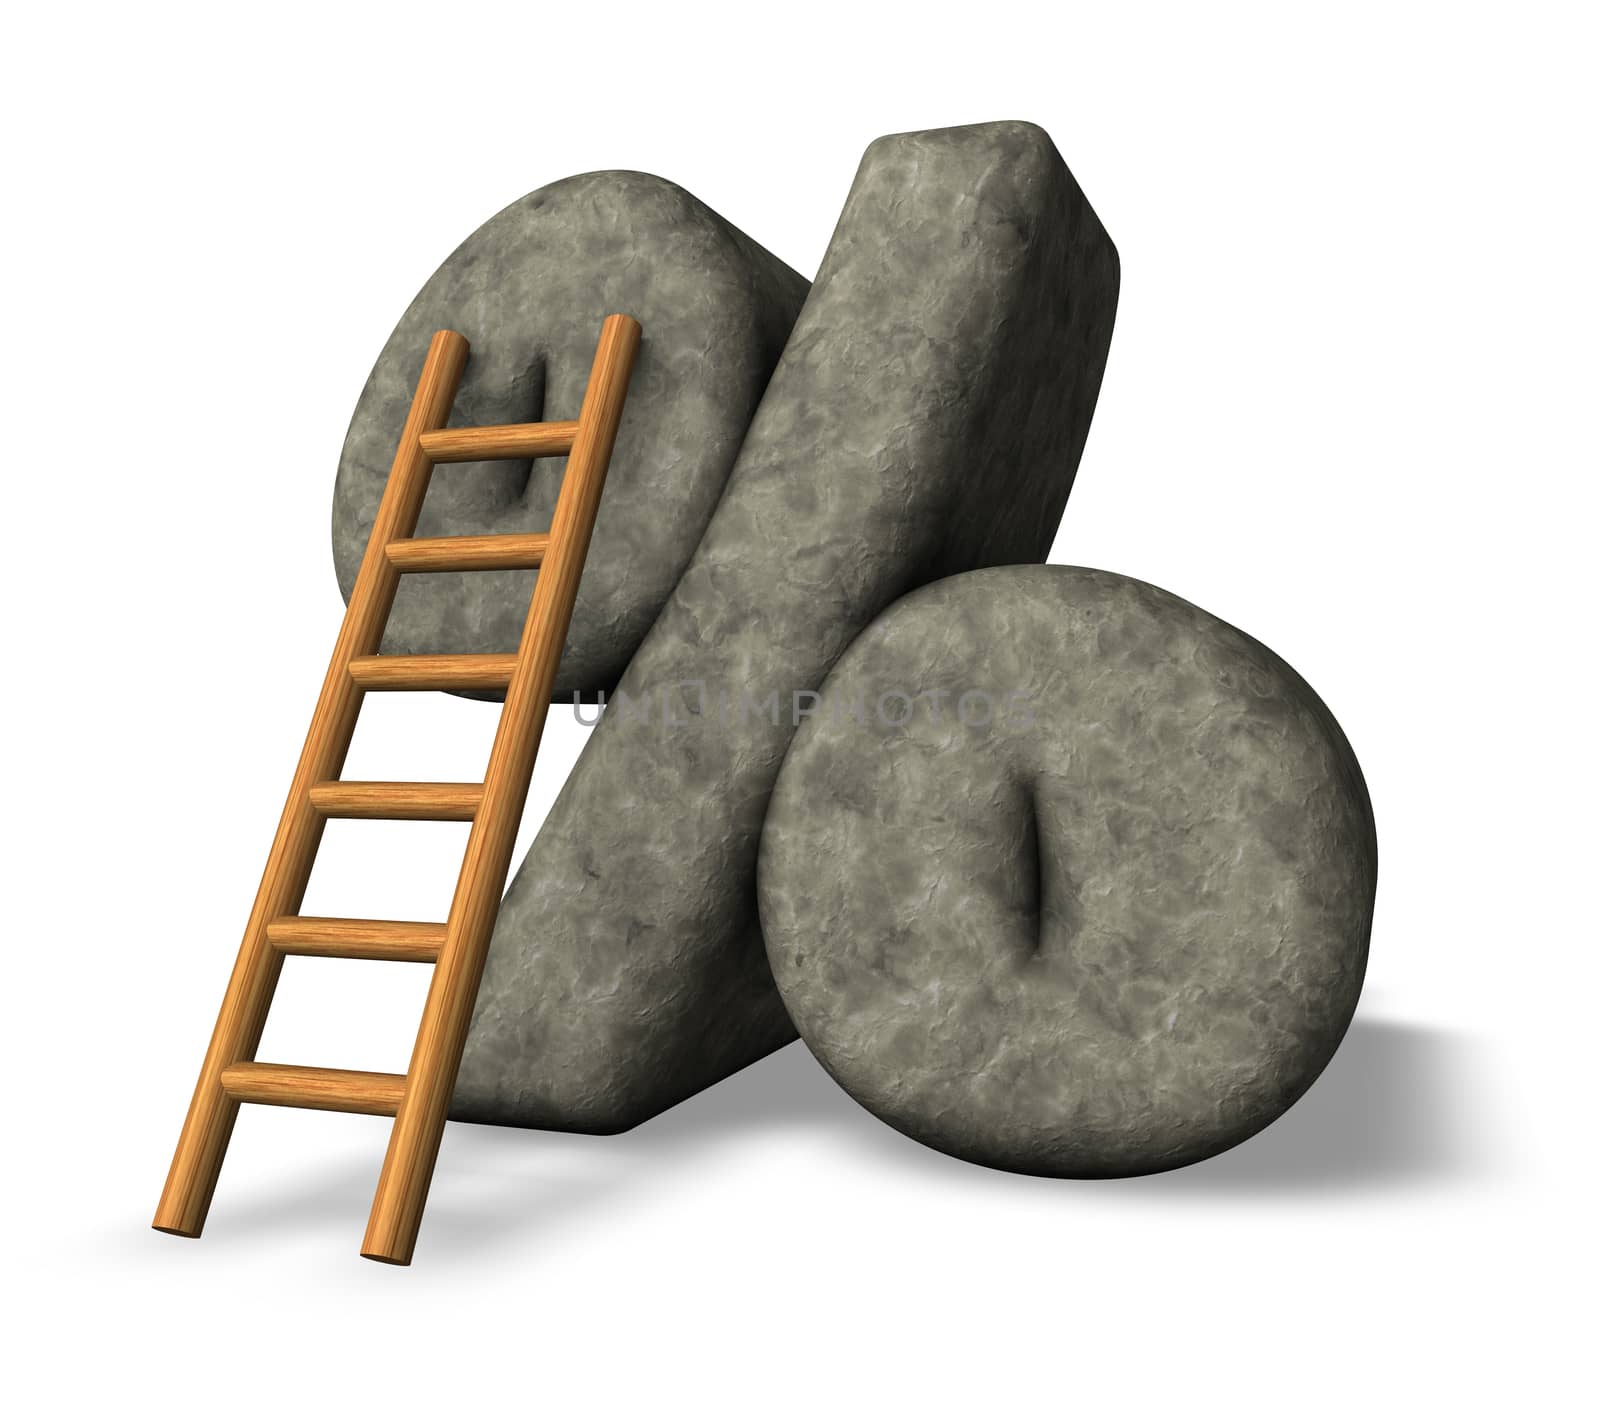 stone percent symbol and ladder on white background - 3d illustration